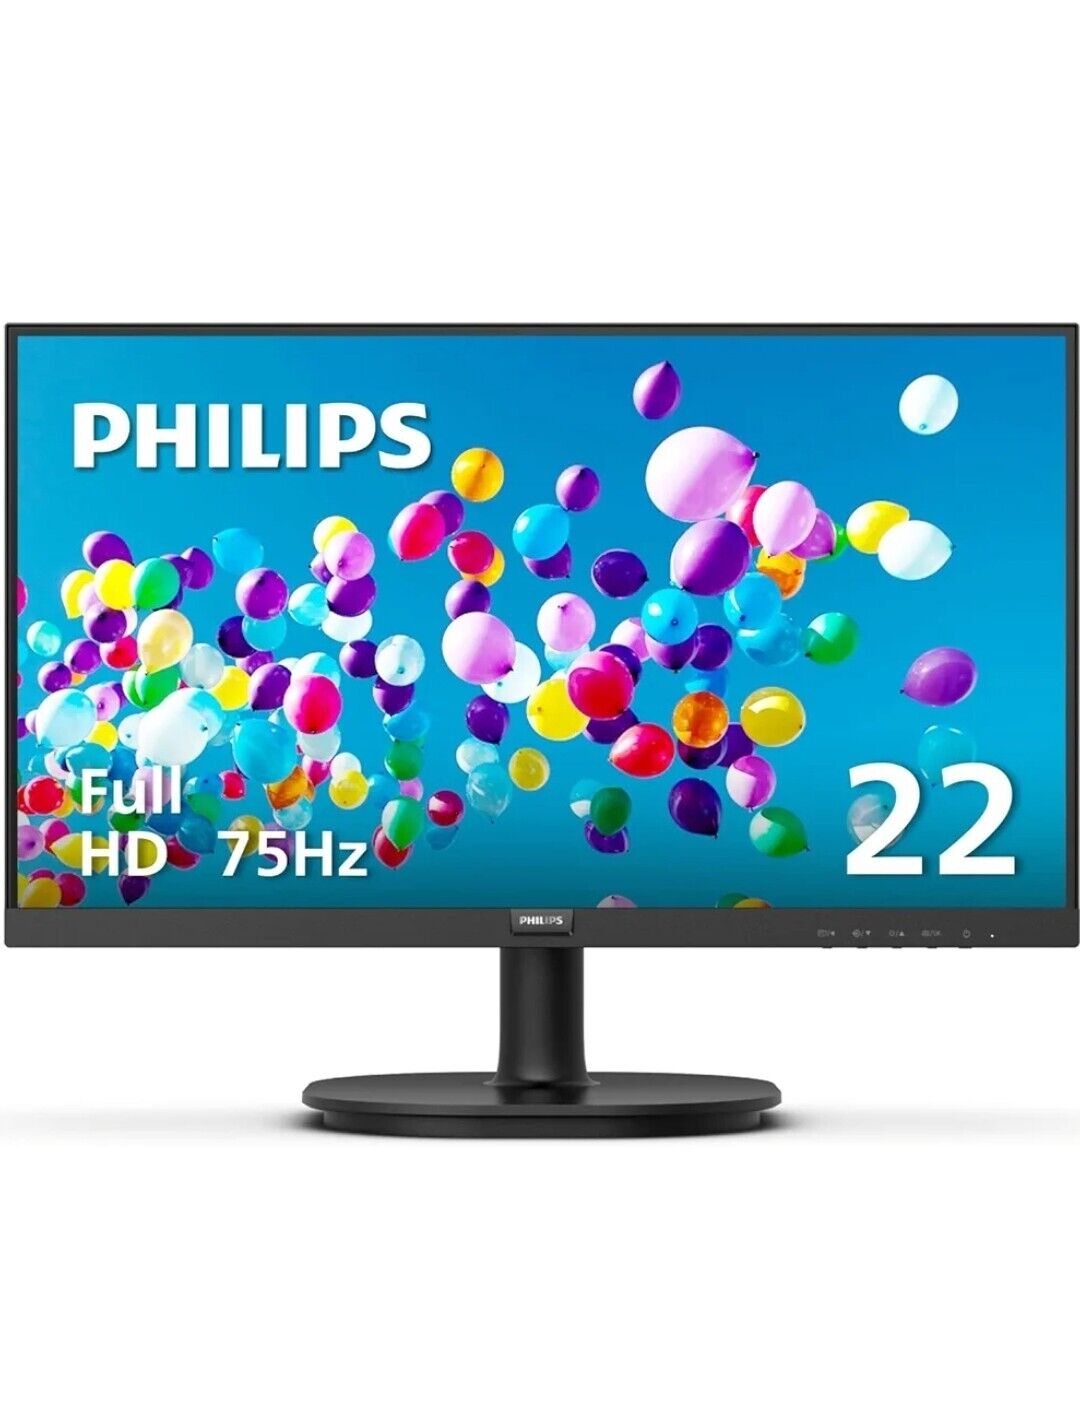 PHILIPS Monitor 22 inch Class Thin Full HD (1920 x 1080) 75Hz 221V8LN